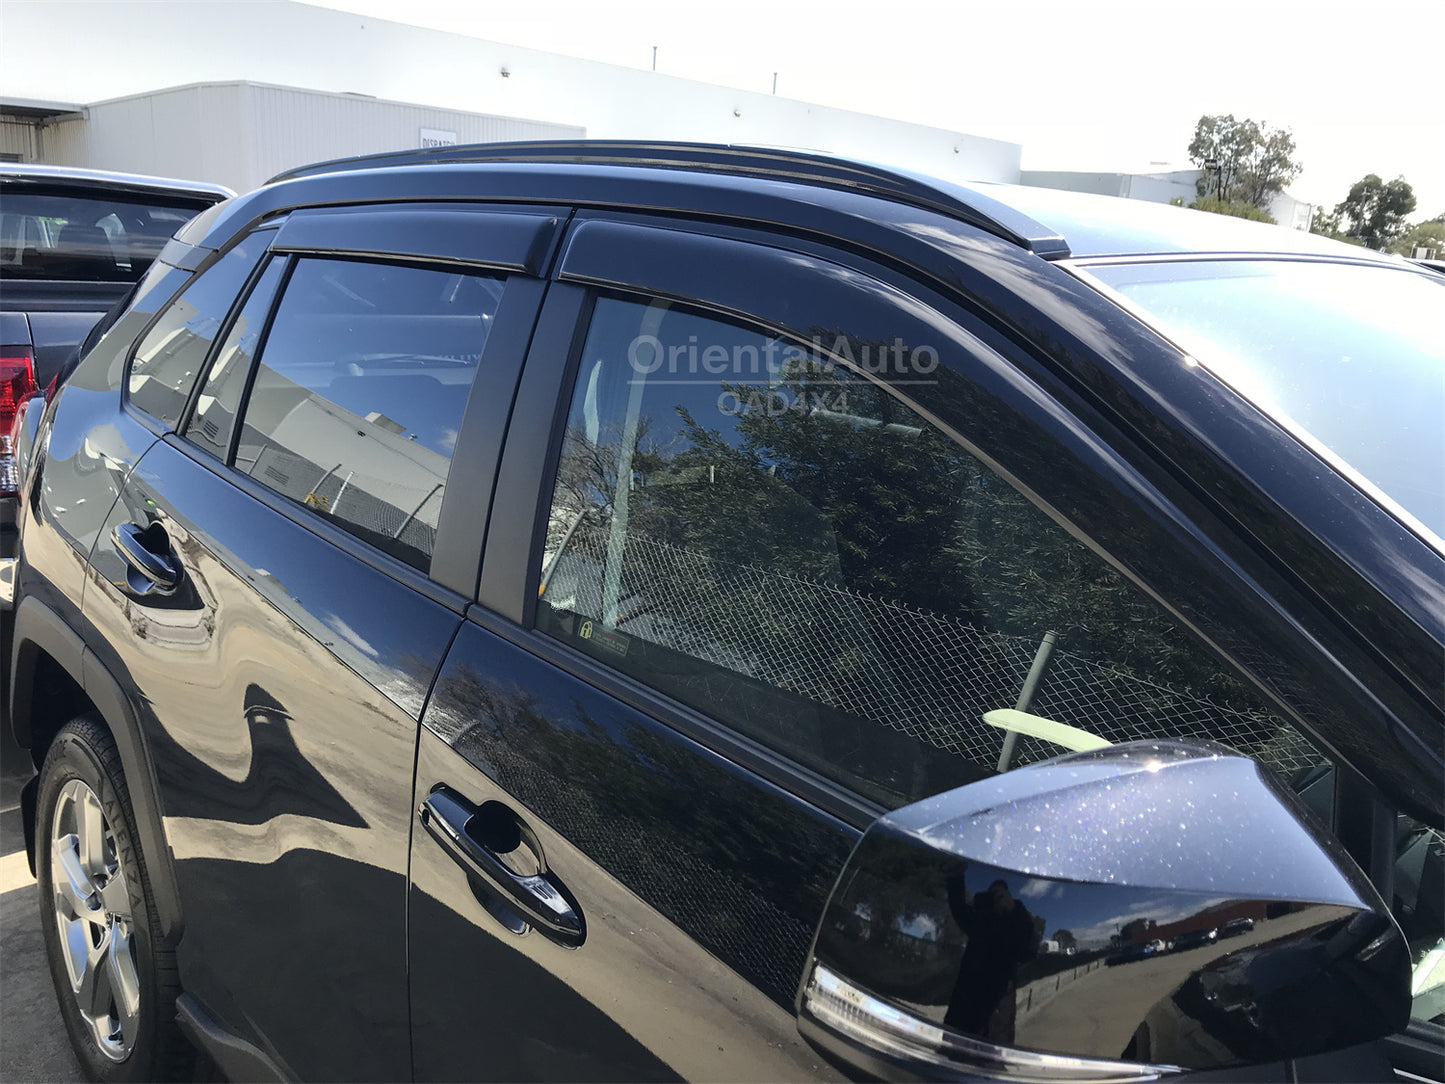 Luxury Weathershield & Injection Modeling Bonnet Protector for Toyota RAV4 2019+ Weather Shields Window Visor + Hood Protector Bonnet Guard for RAV 4